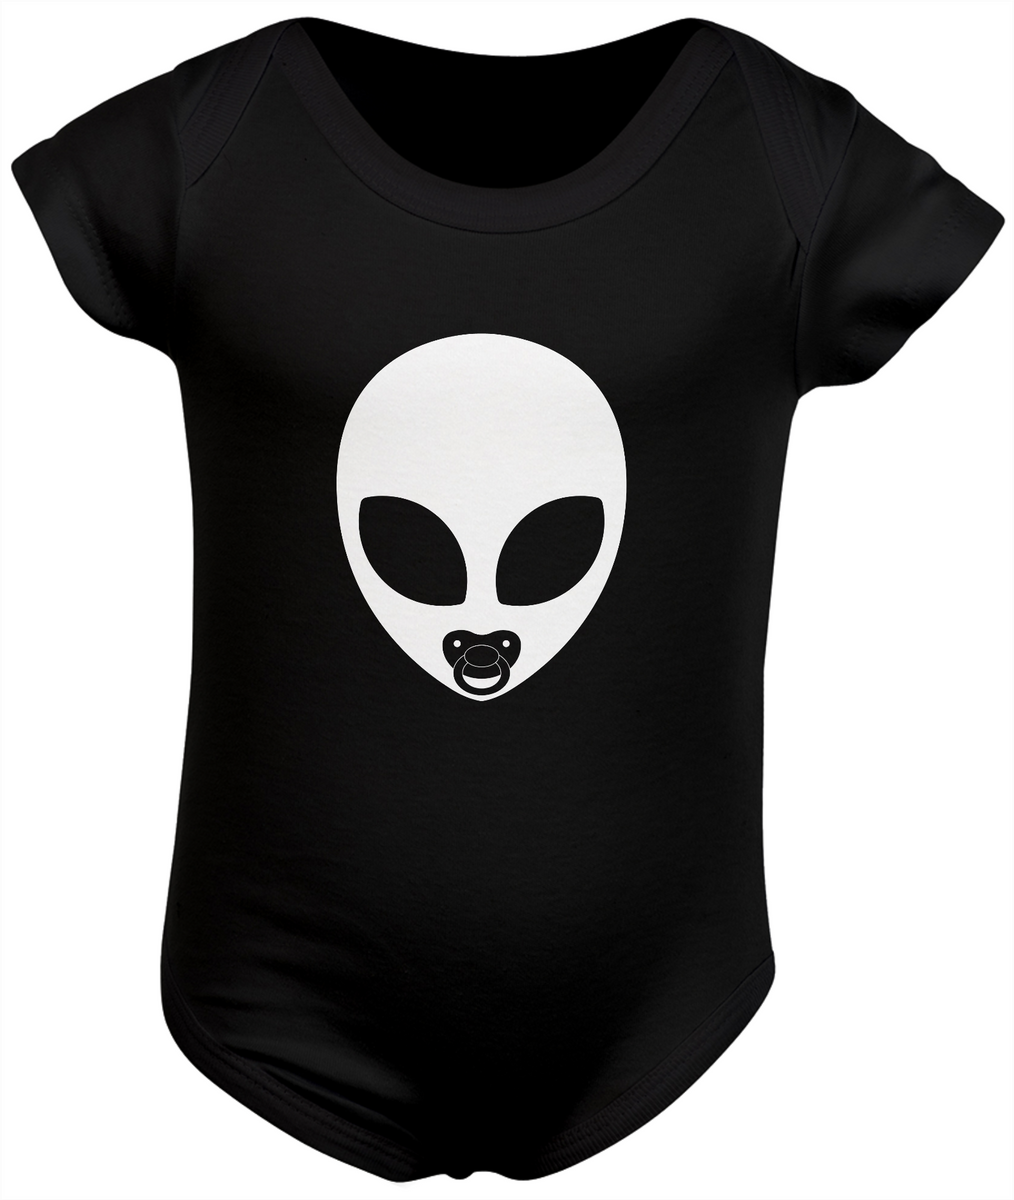 Nome do produto: Alien Baby - Body Infantil [Preto]